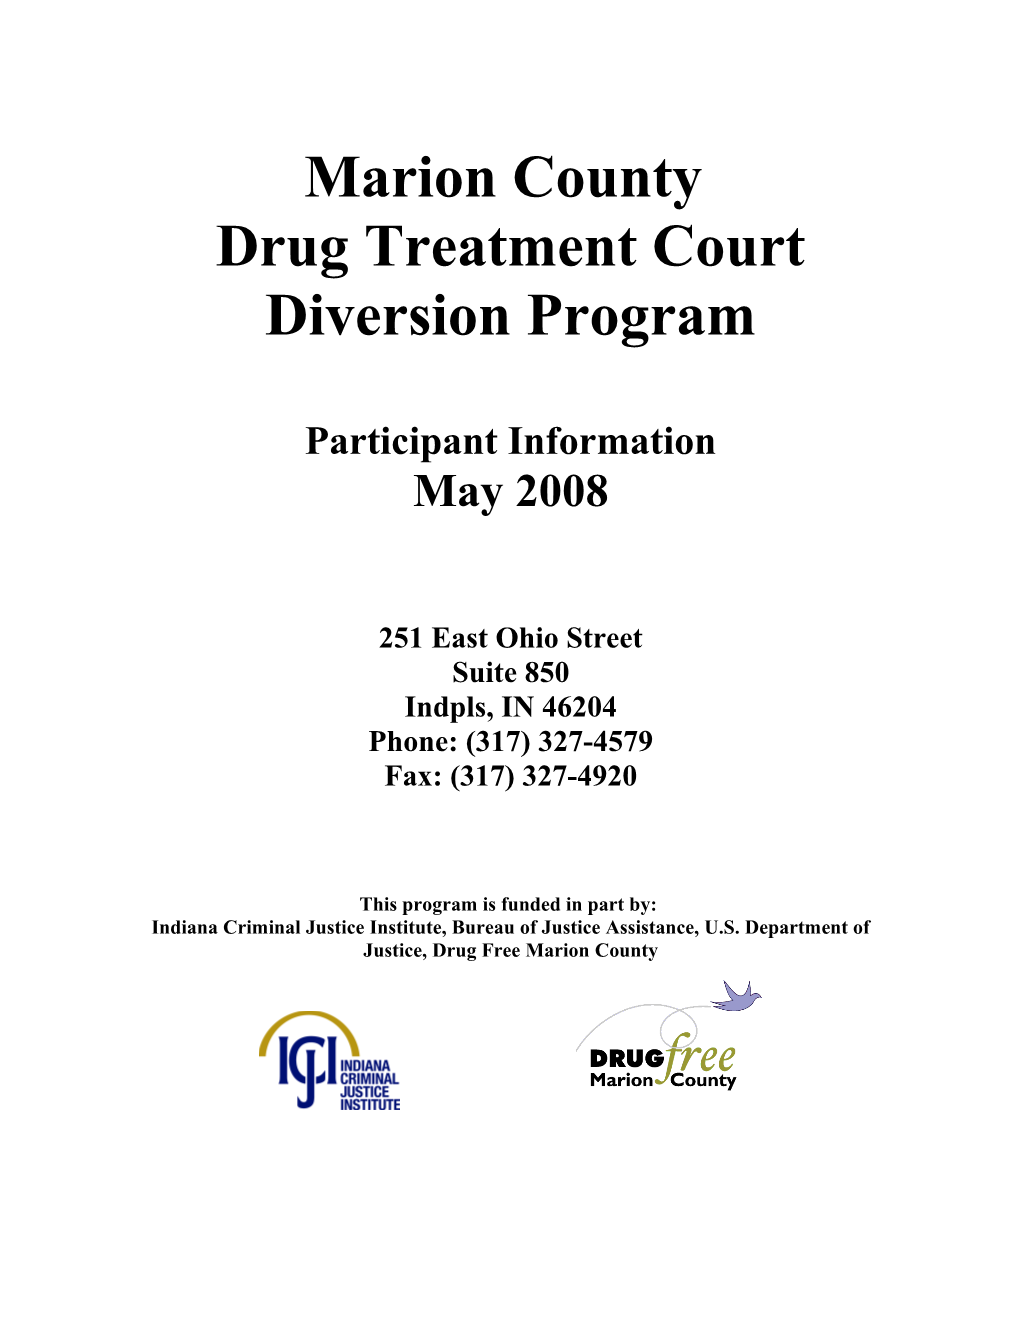 Marion County Drug Treatment Diversion Program